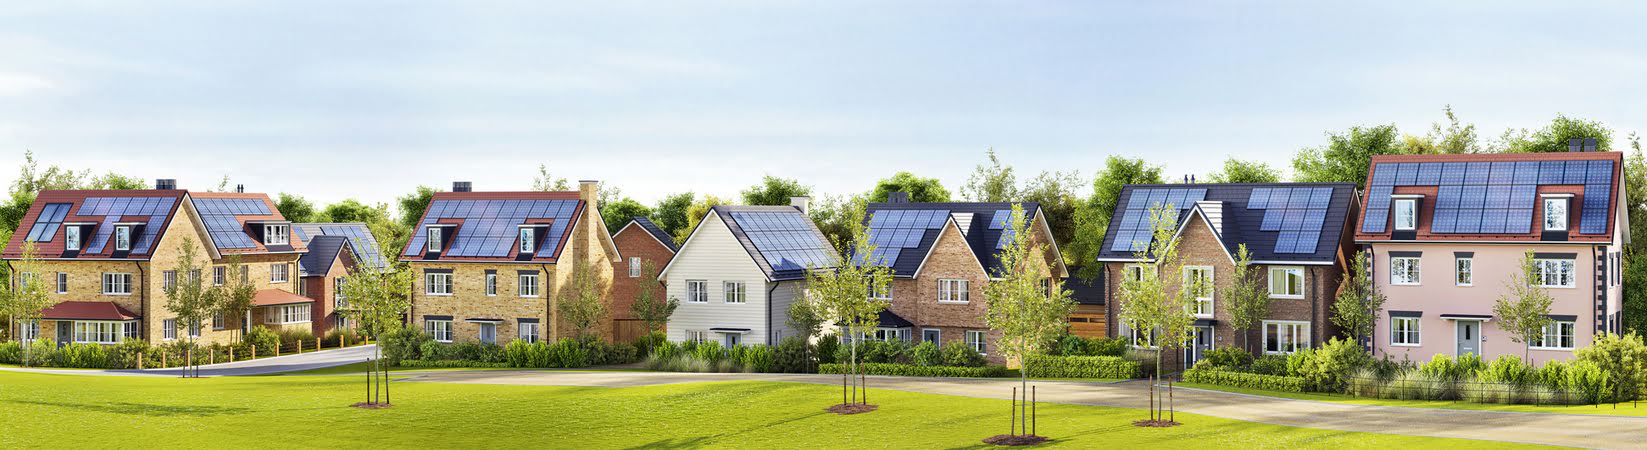 Residential neighborhood with solar installations